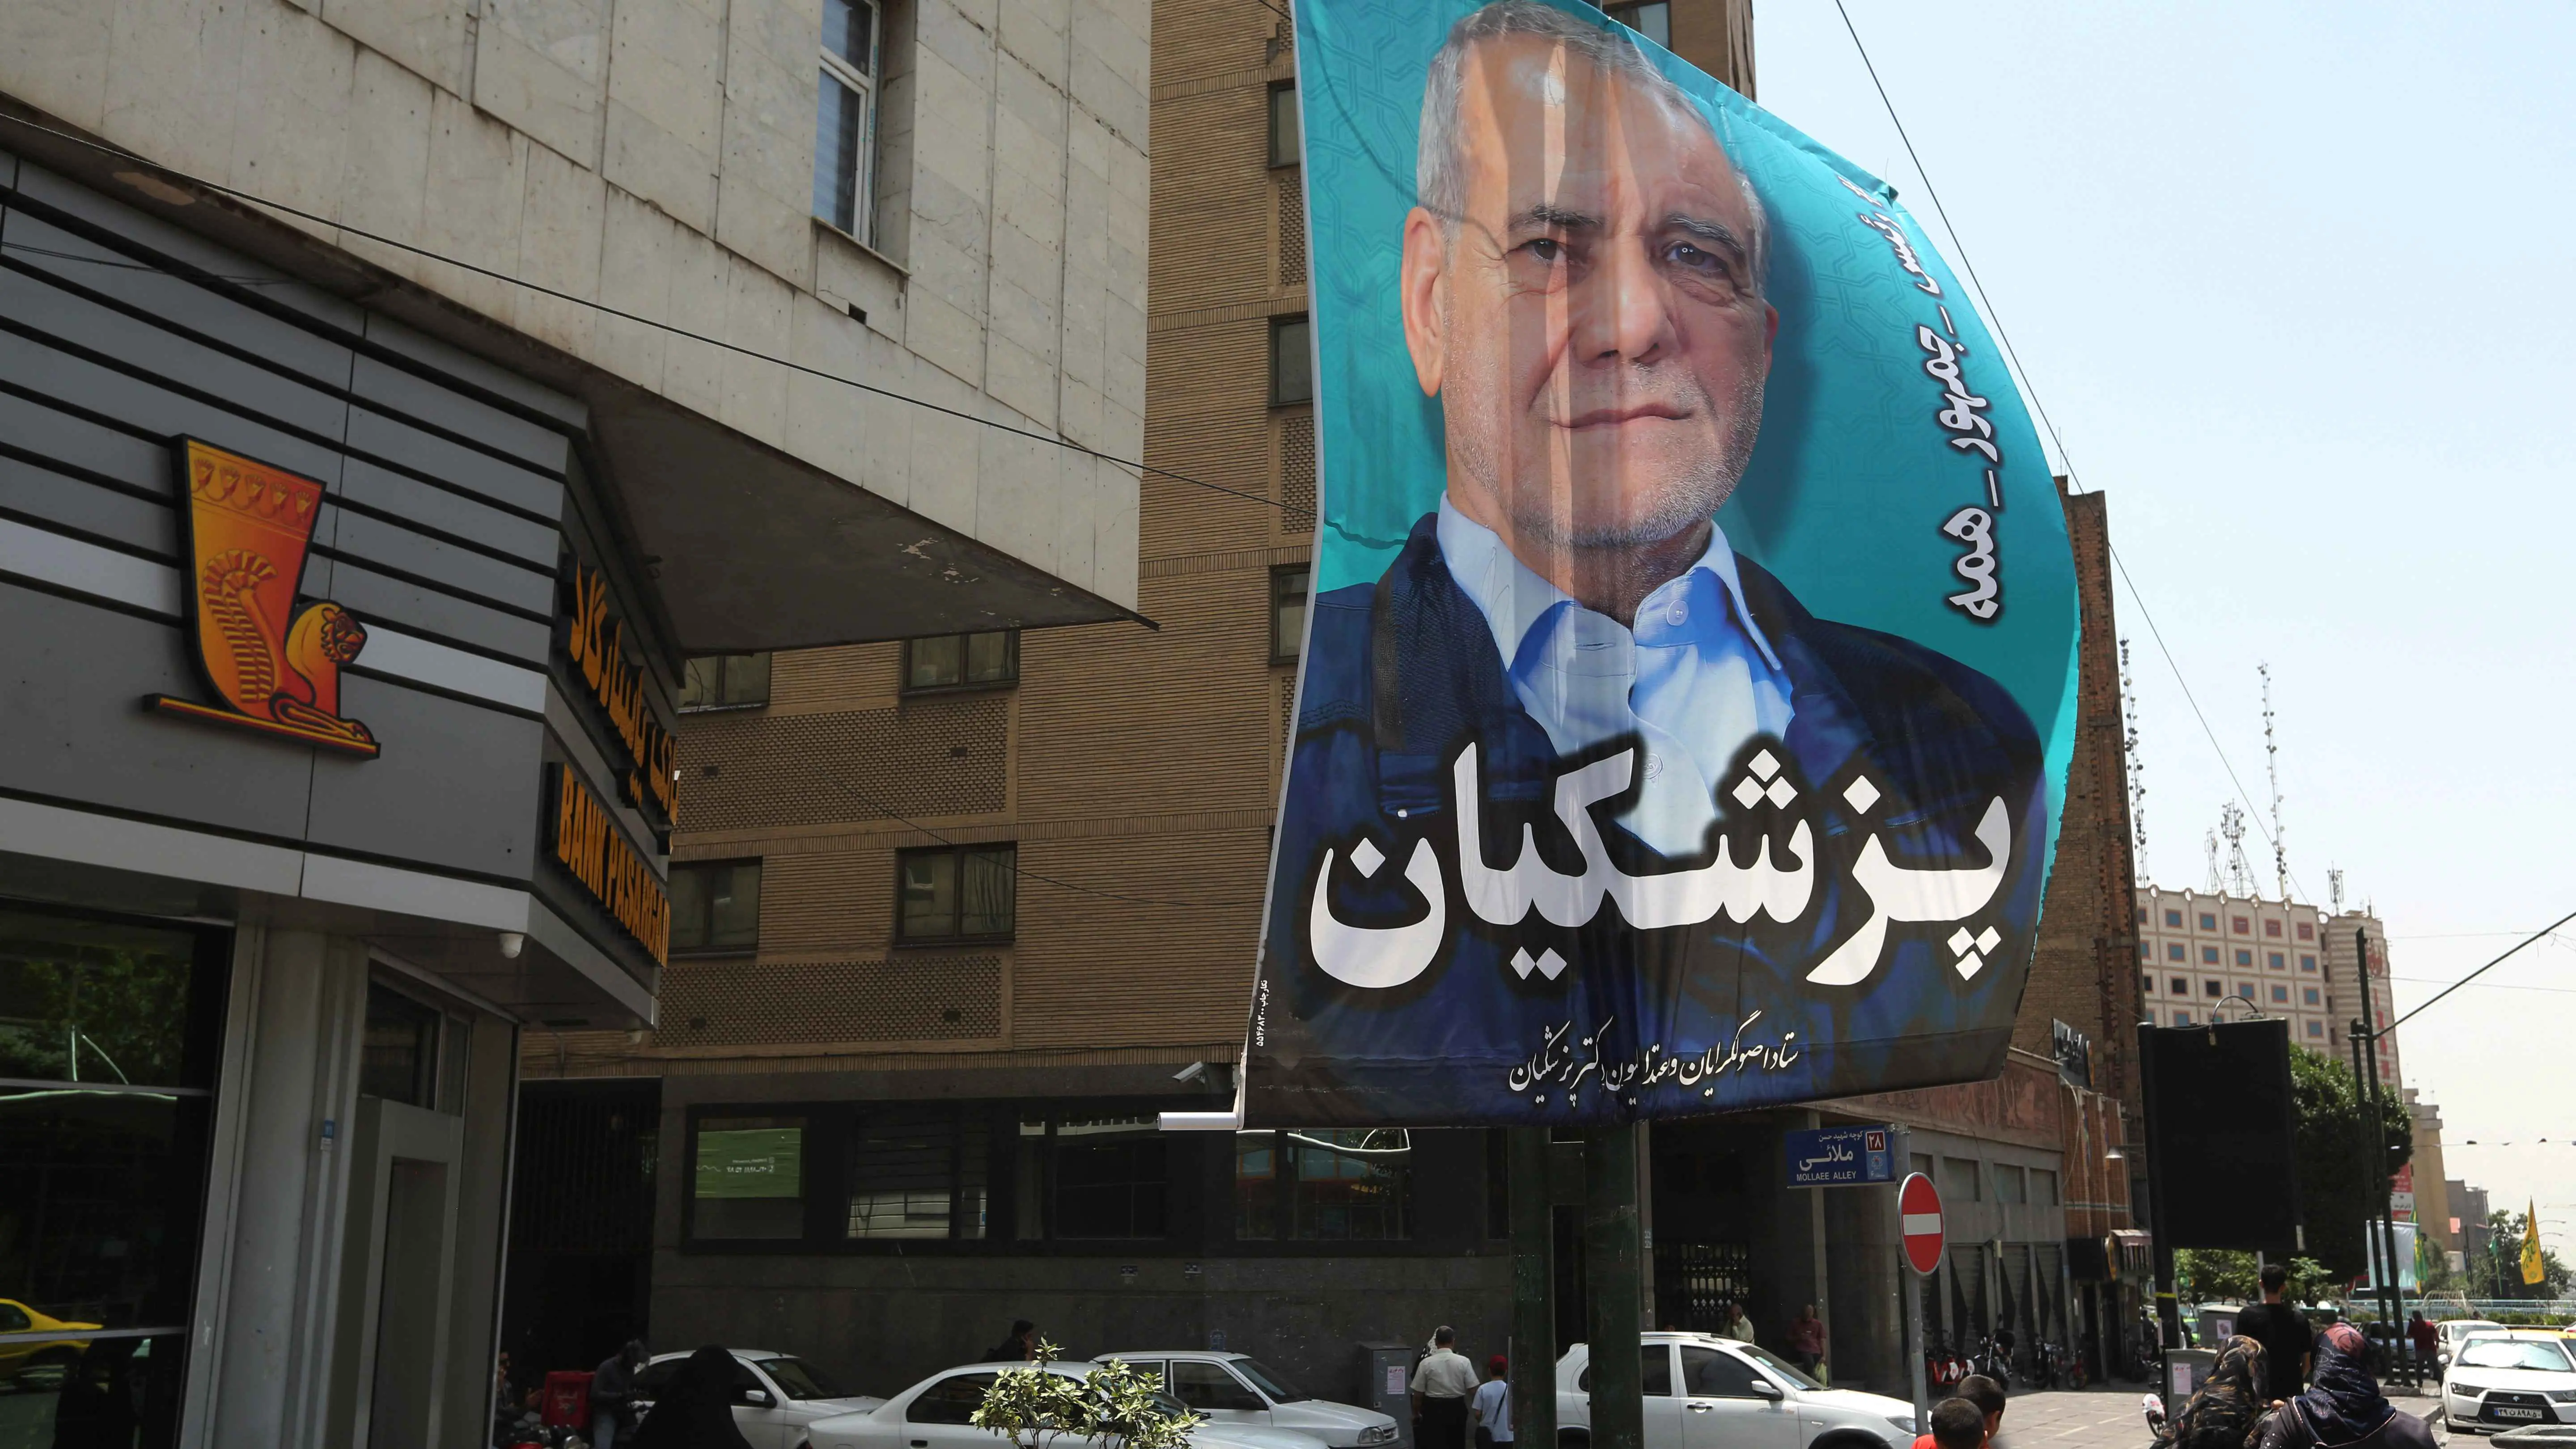 بزشكيان يباشر مهامه رسميا كرئيس لإيران مطلع أغسطس